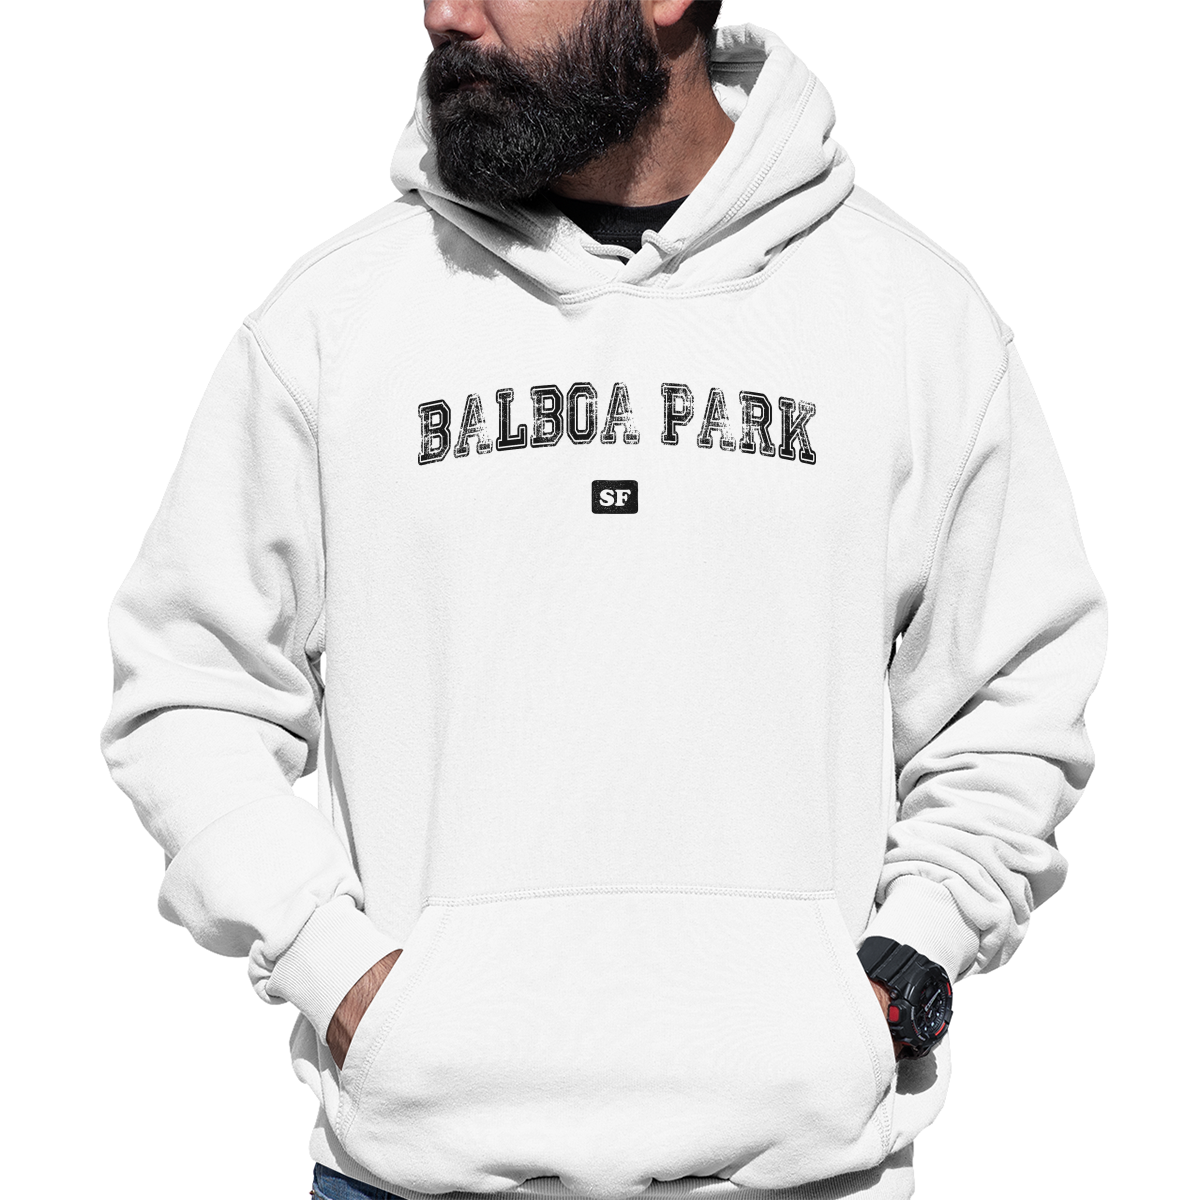 Balboa Park Sf Represent Unisex Hoodie | White